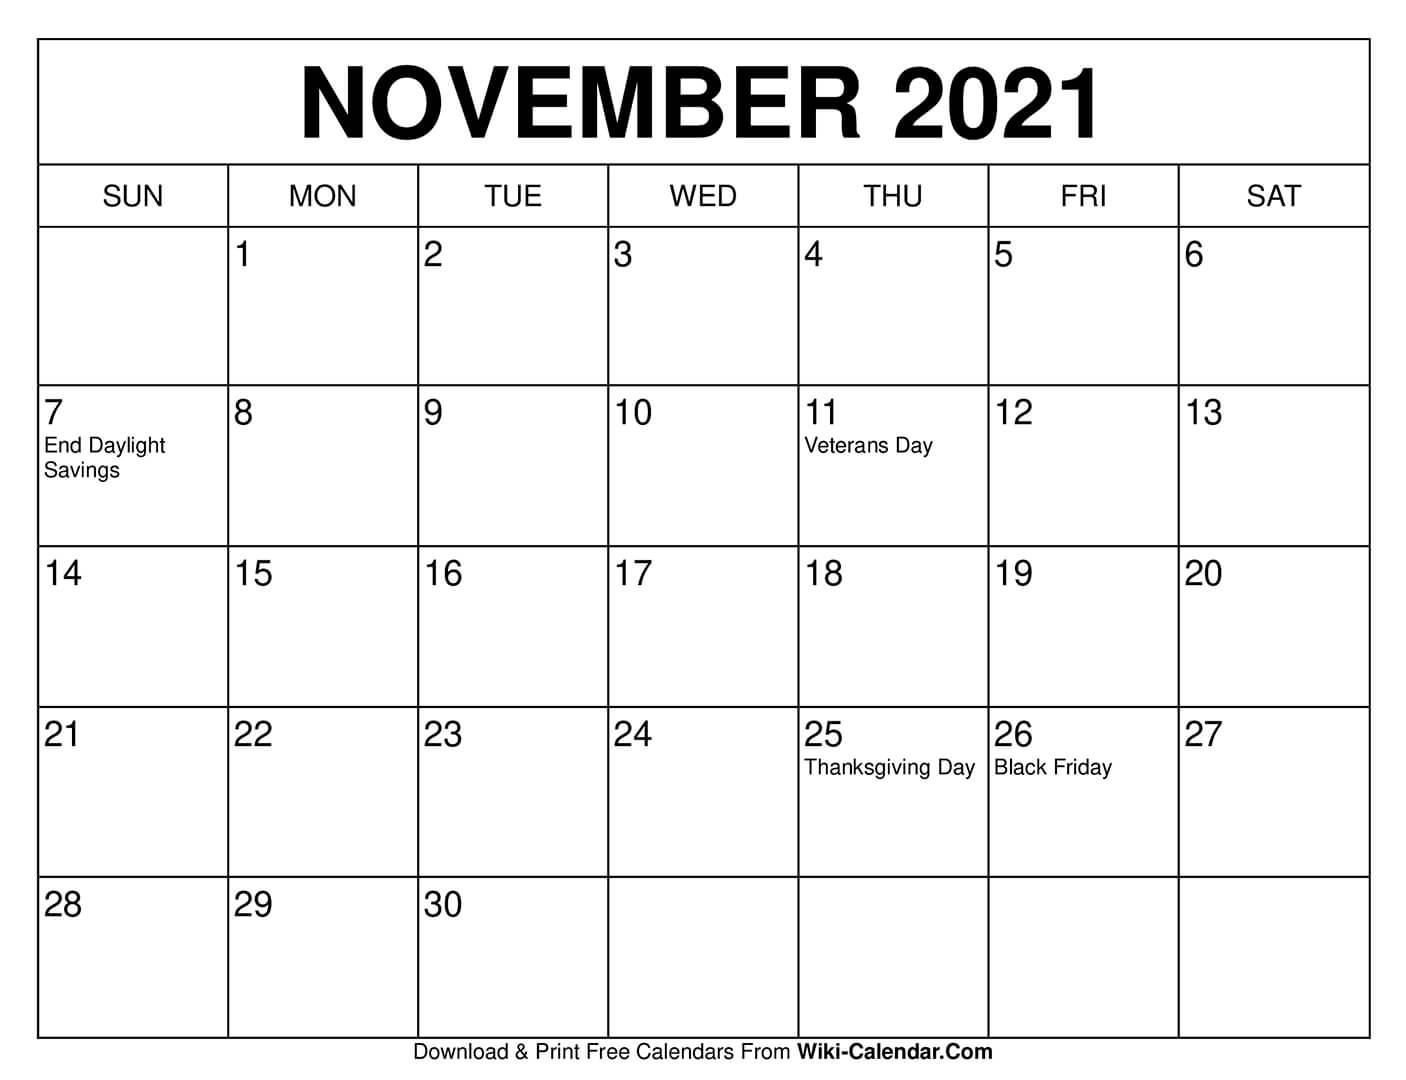 Show Me A Calendar For November 2021 - Texas Map